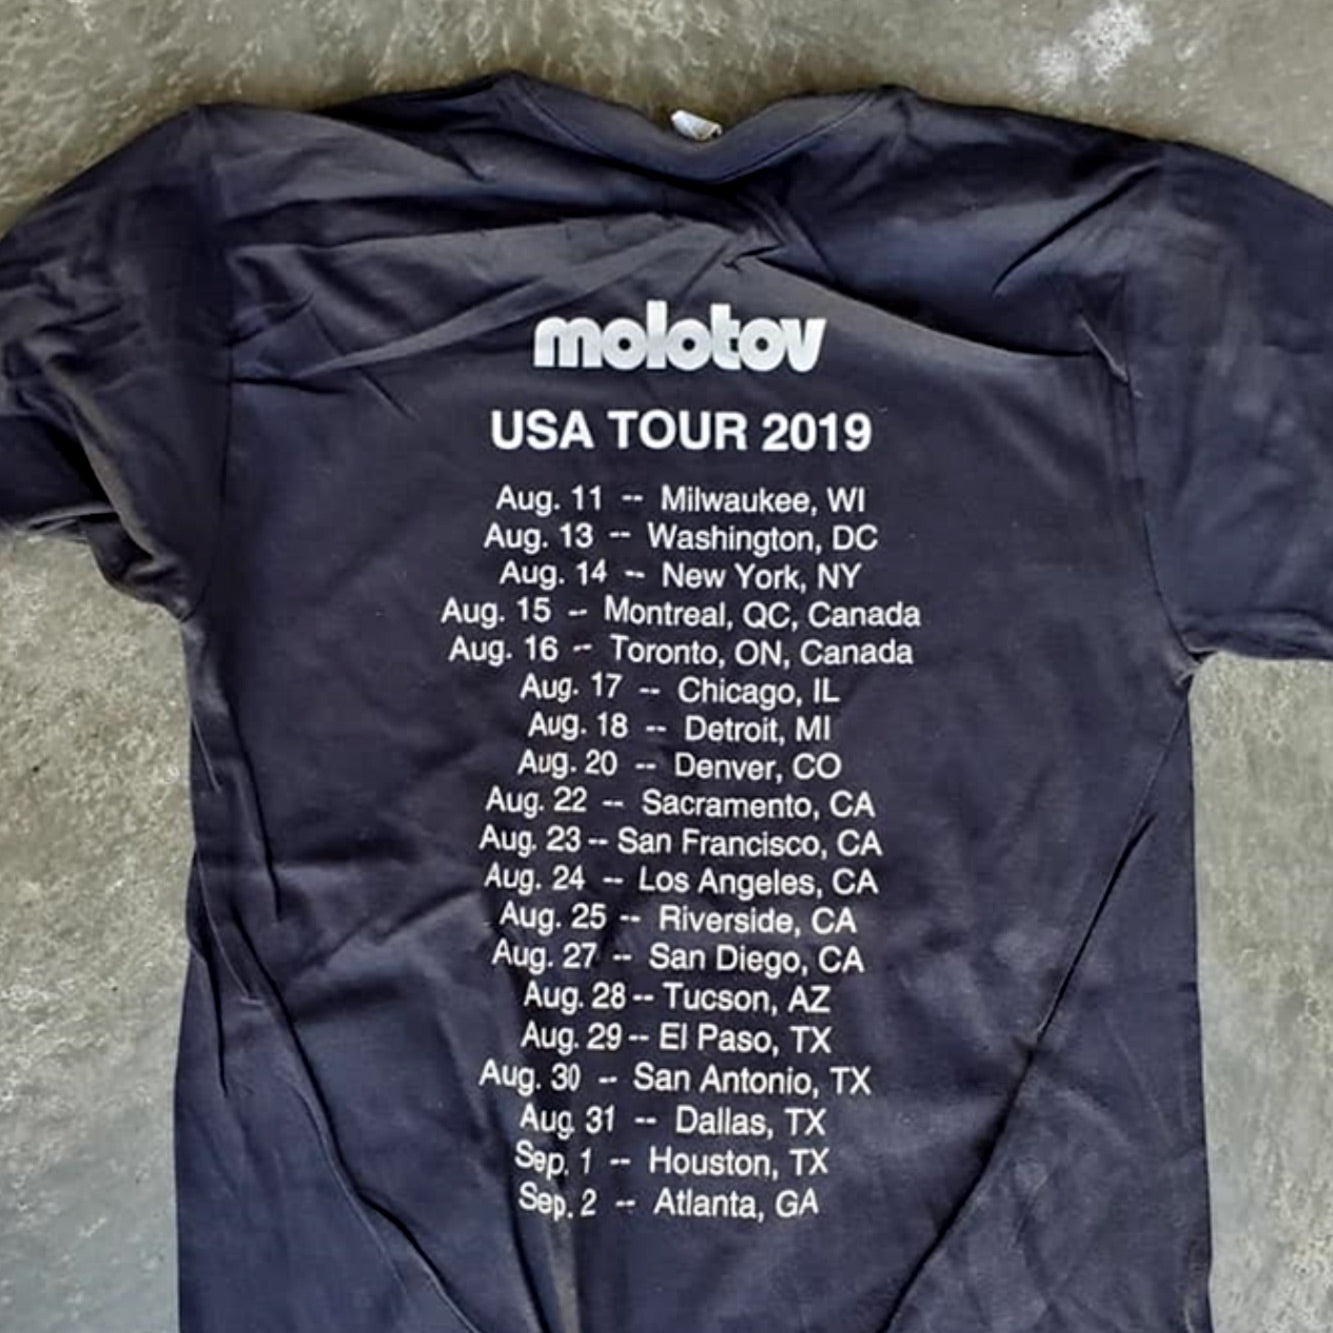 Molotov - USA Tour tee